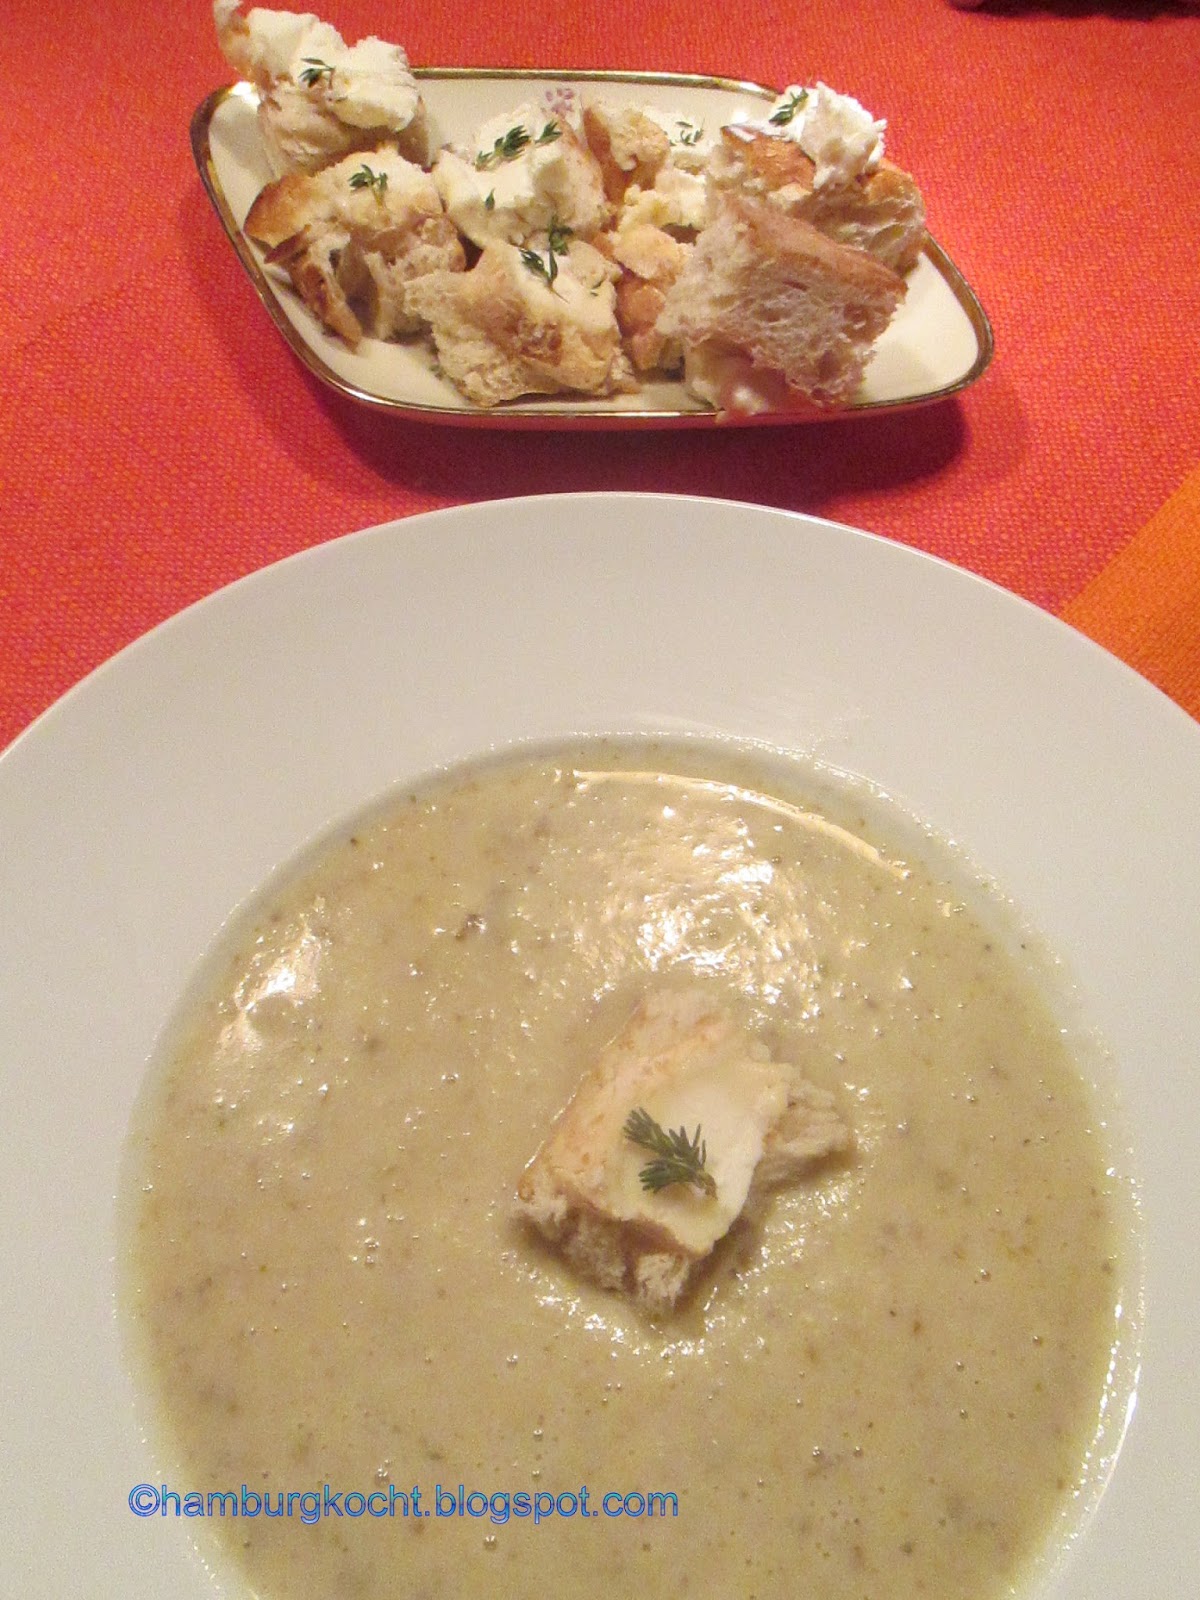 Hamburg kocht!: Gebackene Topinambur-Suppe mit geröstetem Fladenbrot ...